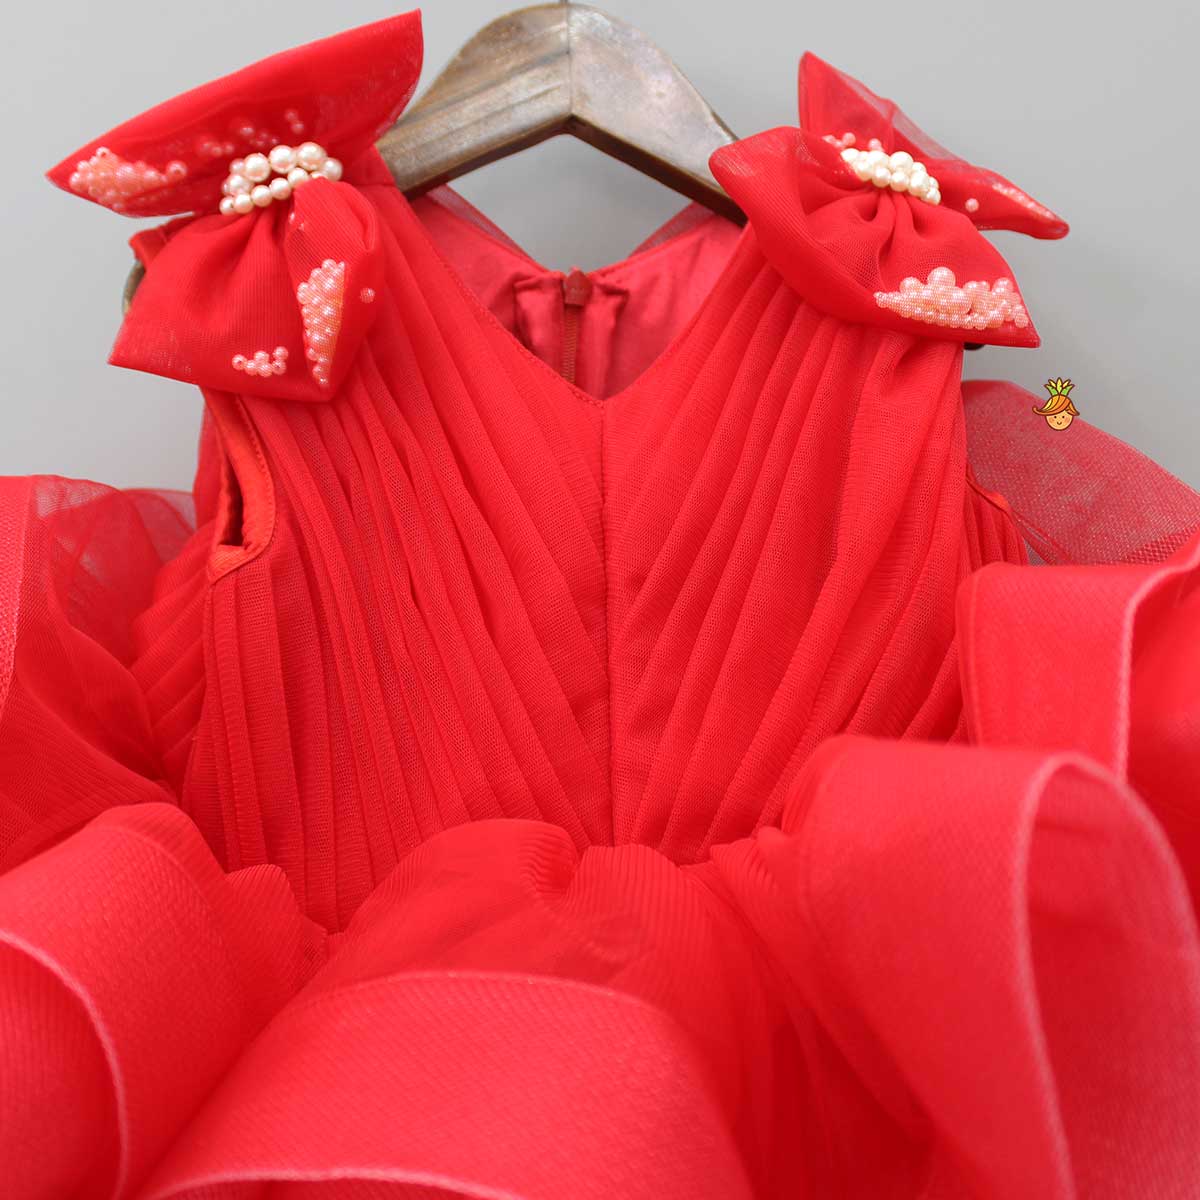 Bows Enhanced Ruffle Layered Red Net Dress